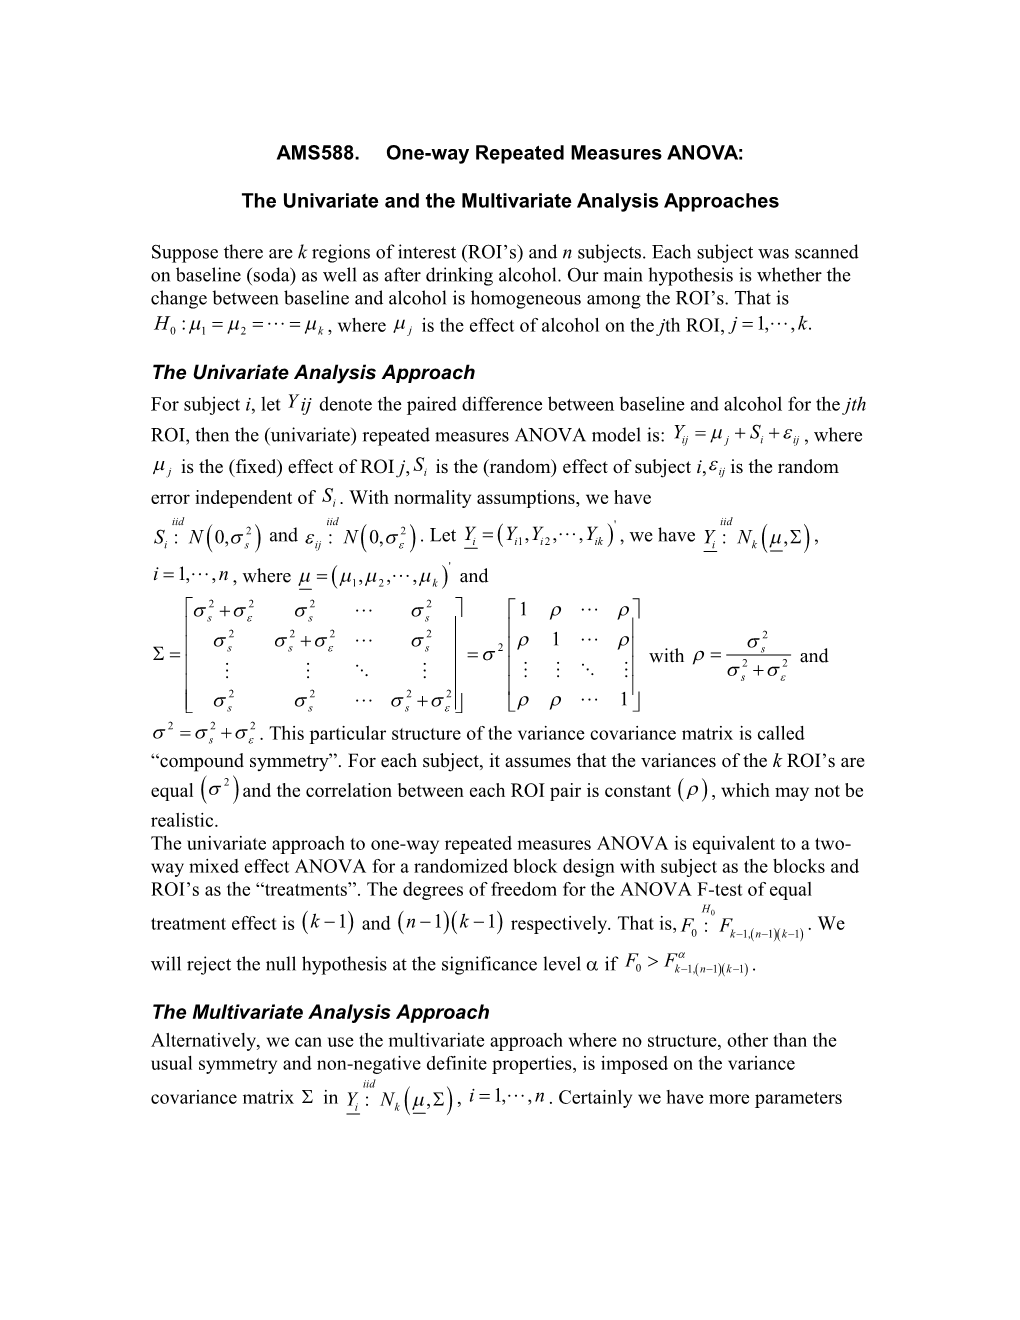 Repeated Measures ANOVA Versus Multivariate ANOVA (MANOVA)